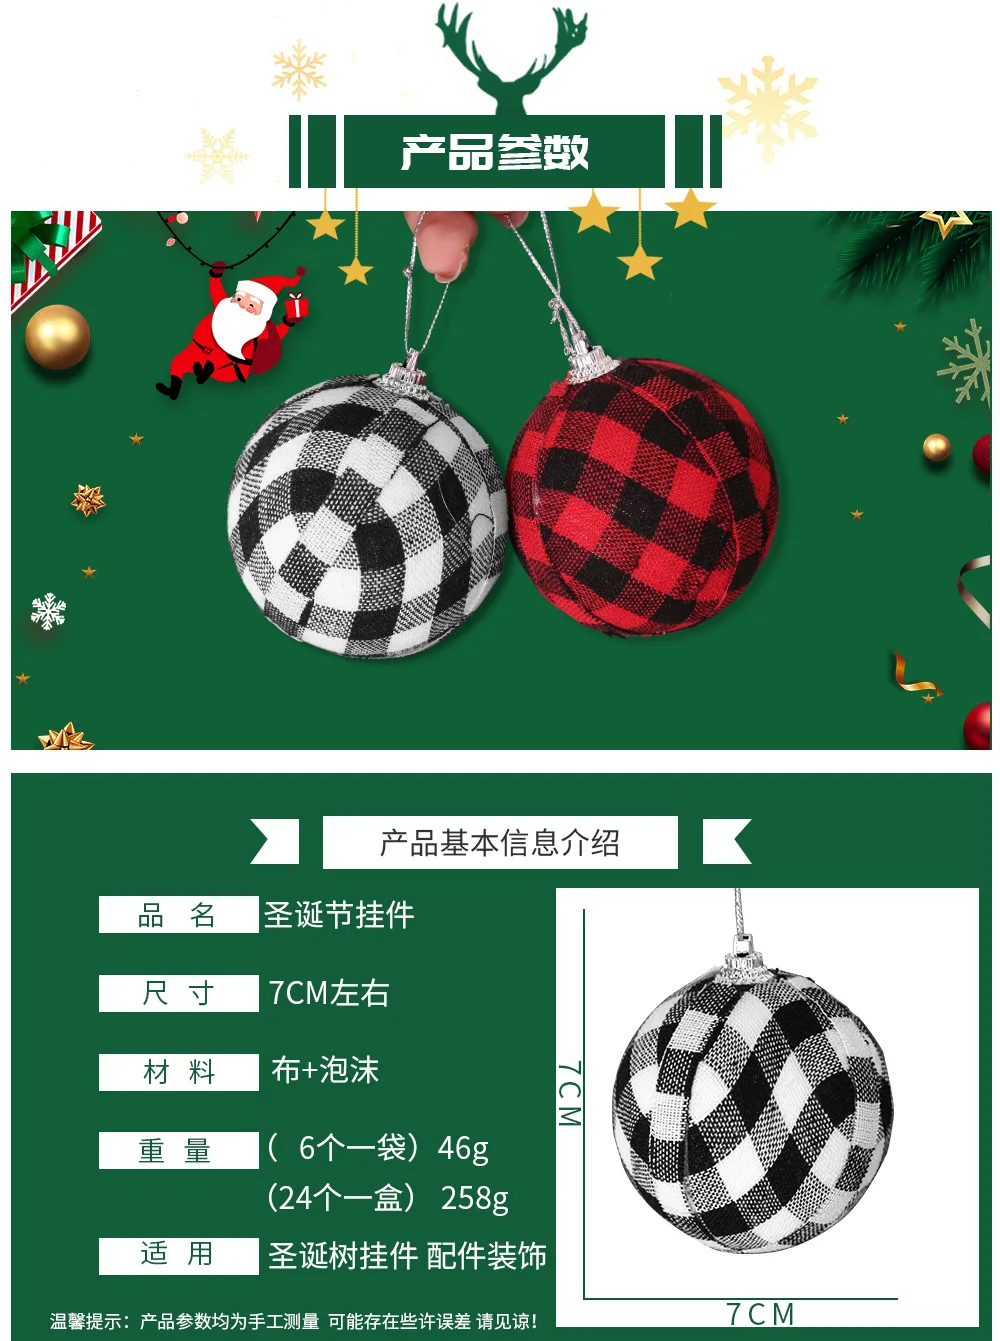 6 бр. Коледен орнамент 7 см в черно-бяла клетка, Коледна топка, комплект, Коледно дърво, украшение, топка, Коледна украса за дома 5